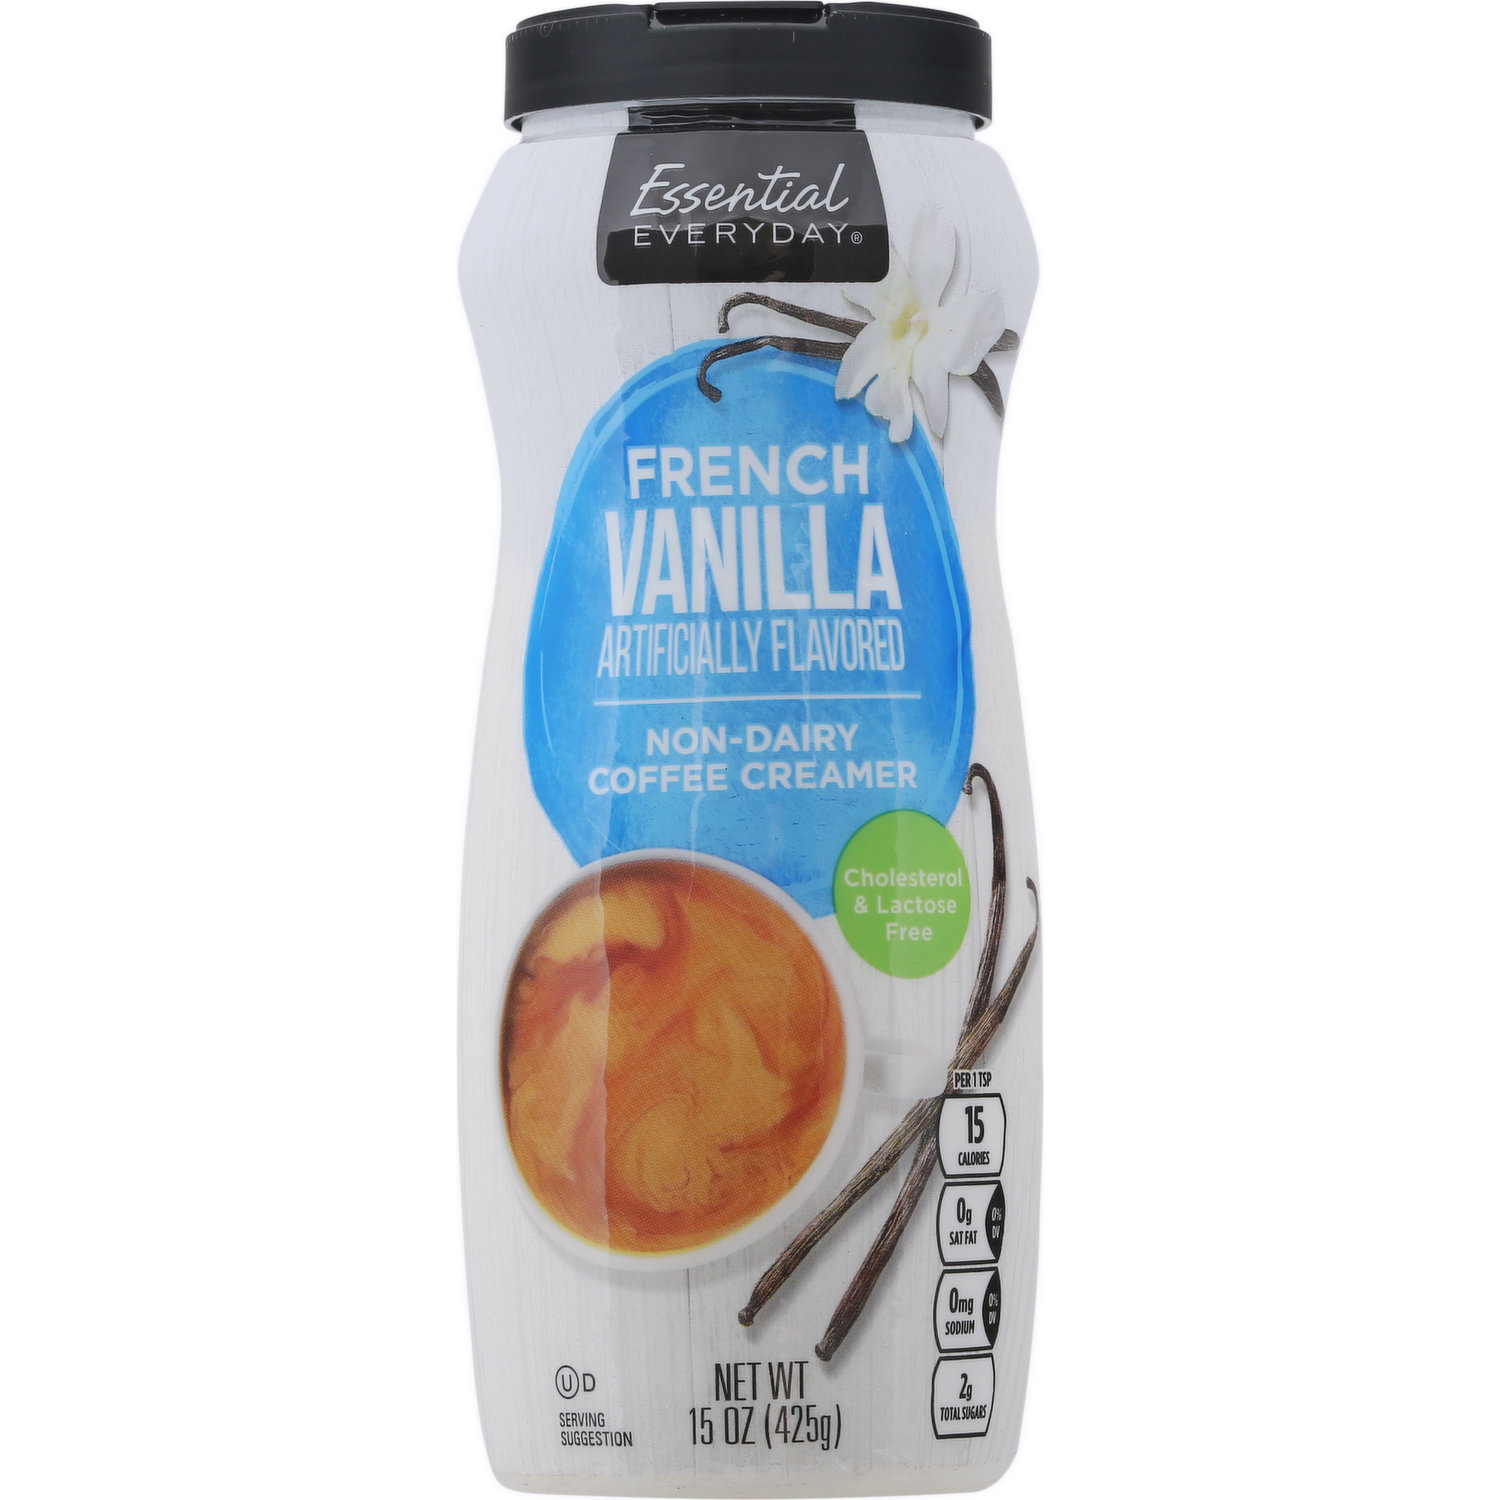 Buy Coffee Mate French Vanilla ( 425g / 15oz )